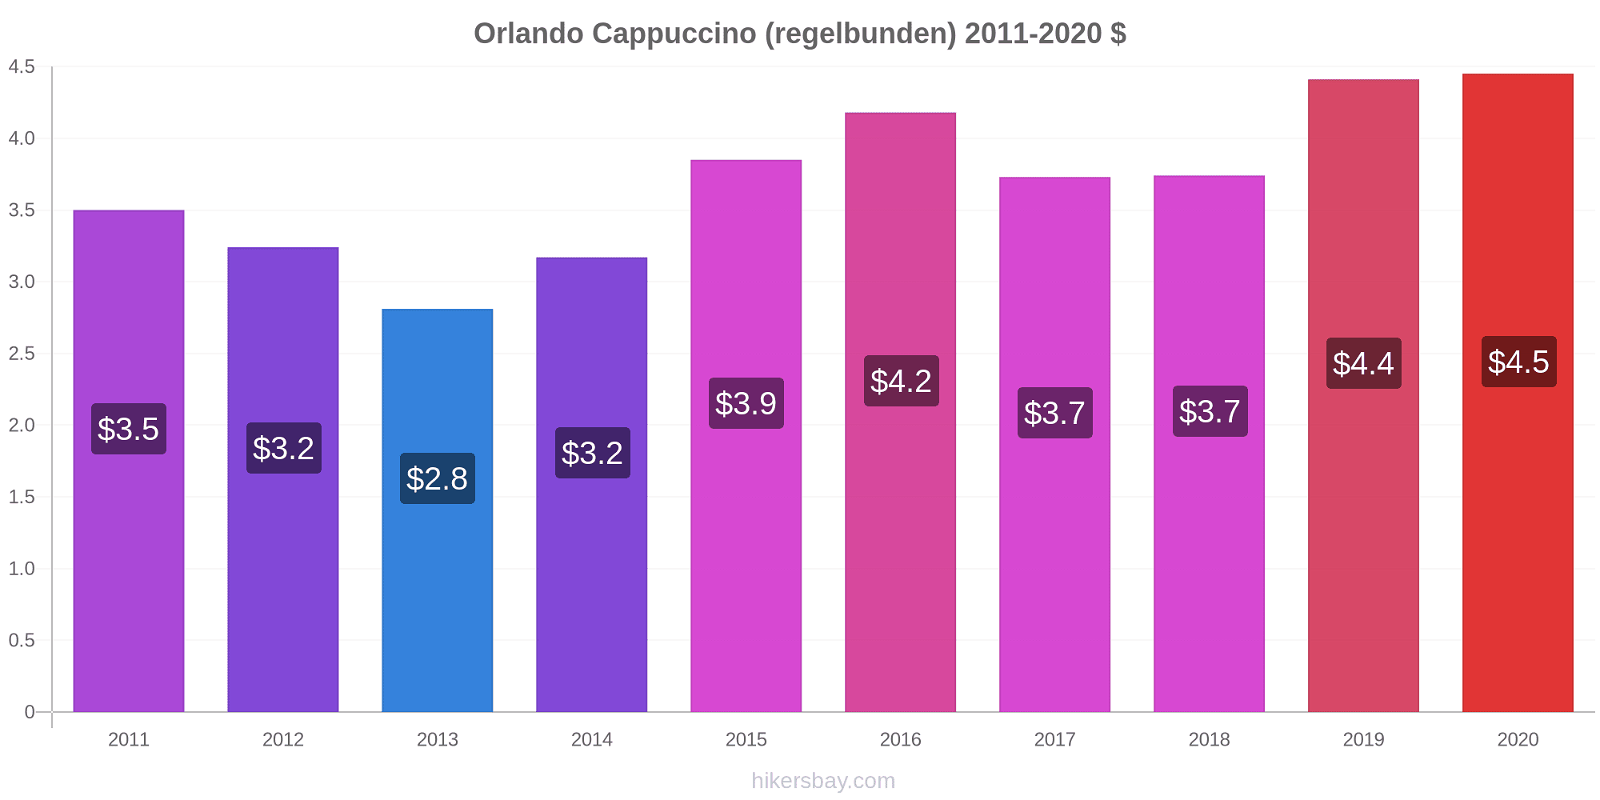 Orlando prisförändringar Cappuccino (regelbunden) hikersbay.com